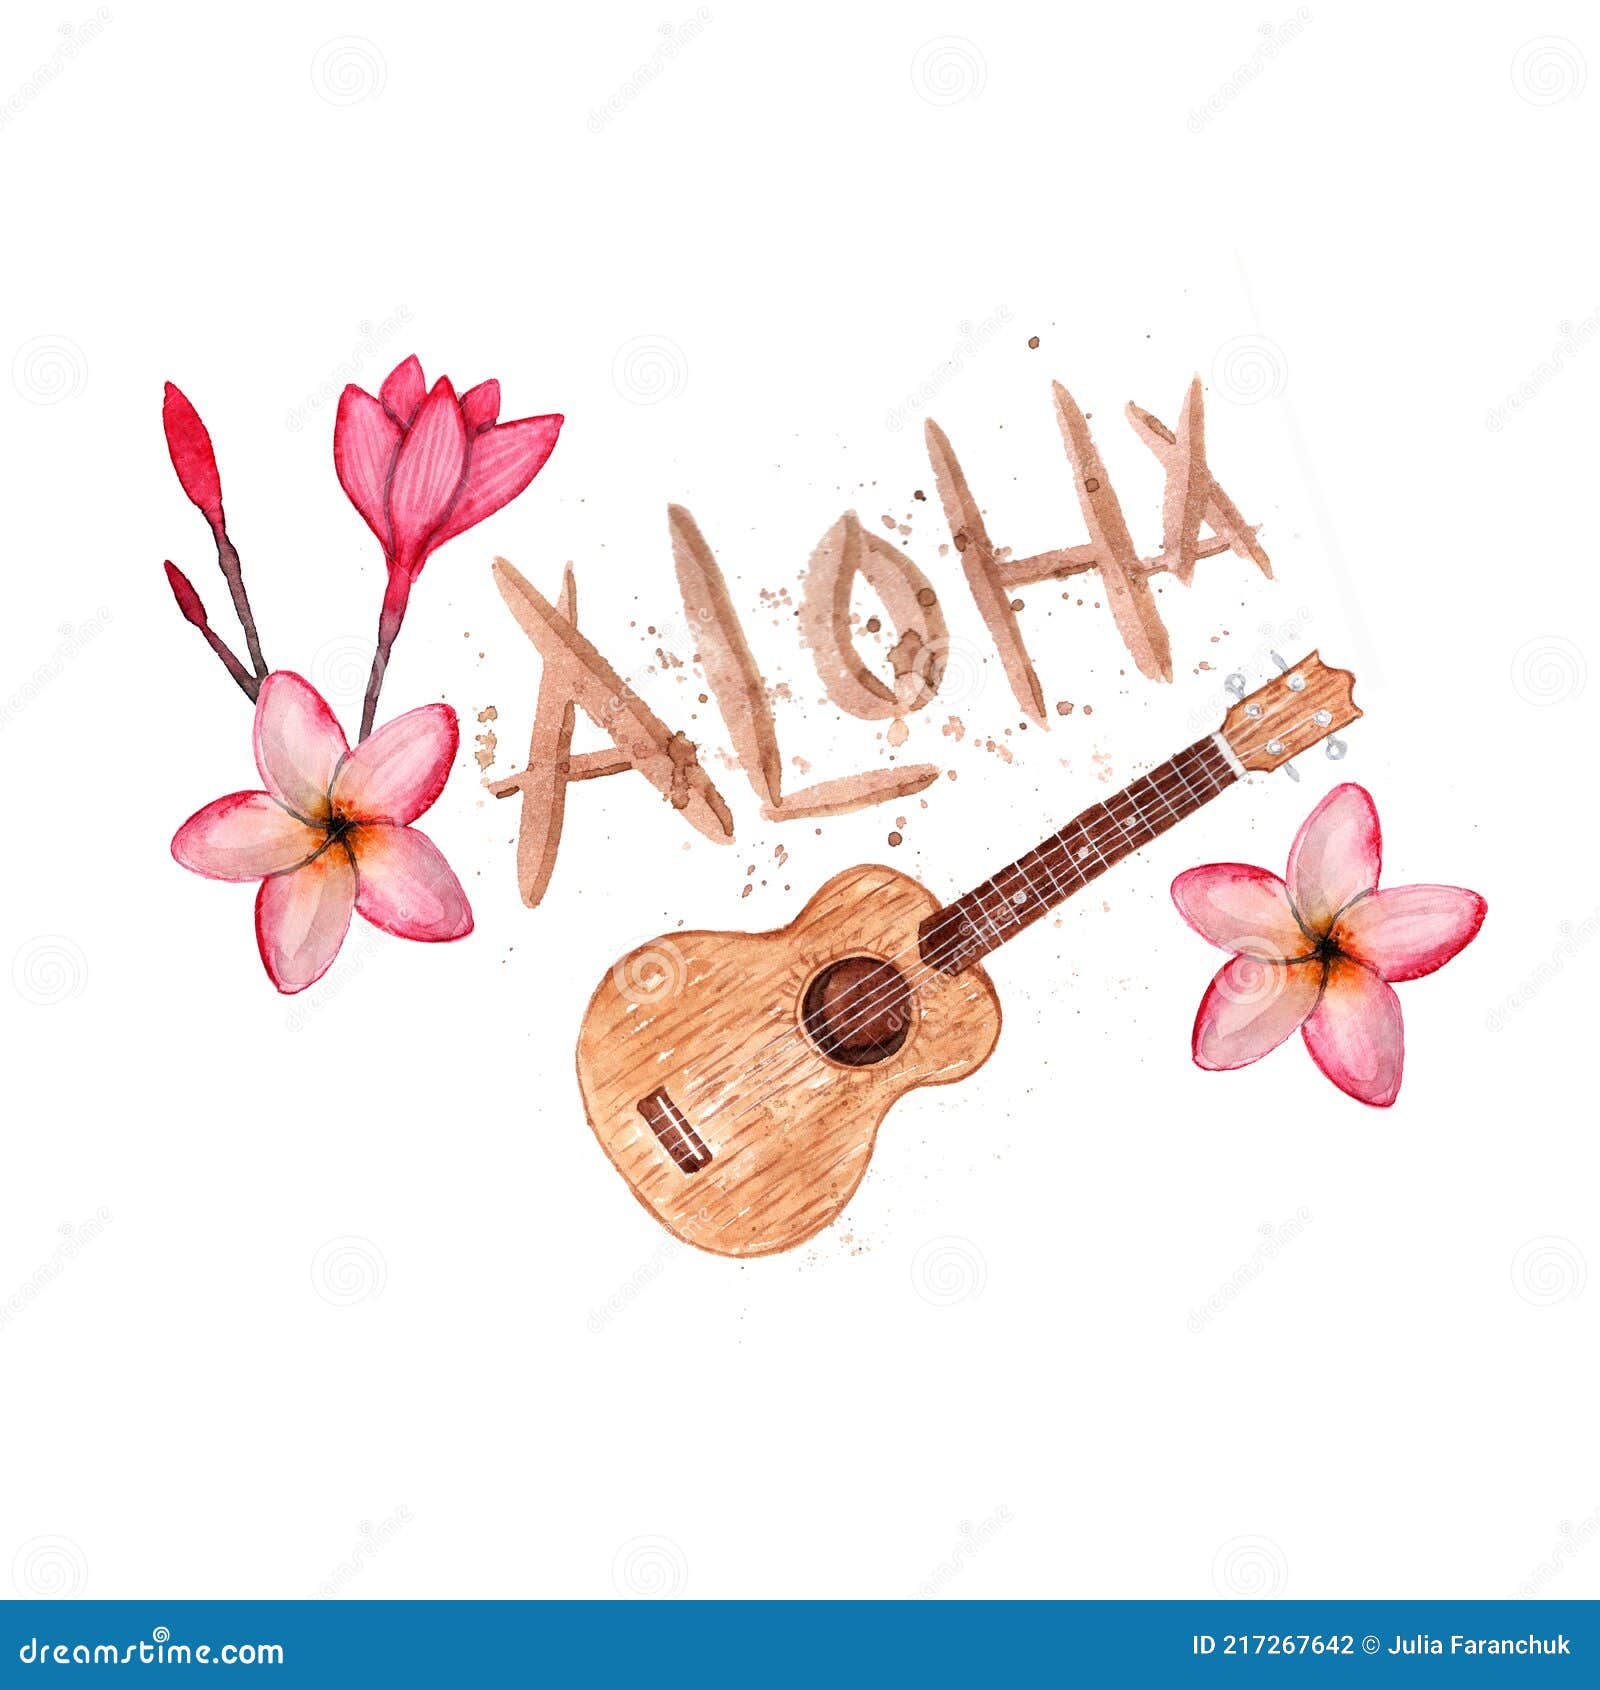 hawaiian simbols - luau, aloha, ukulele, plumeria. watercolor .  on white.